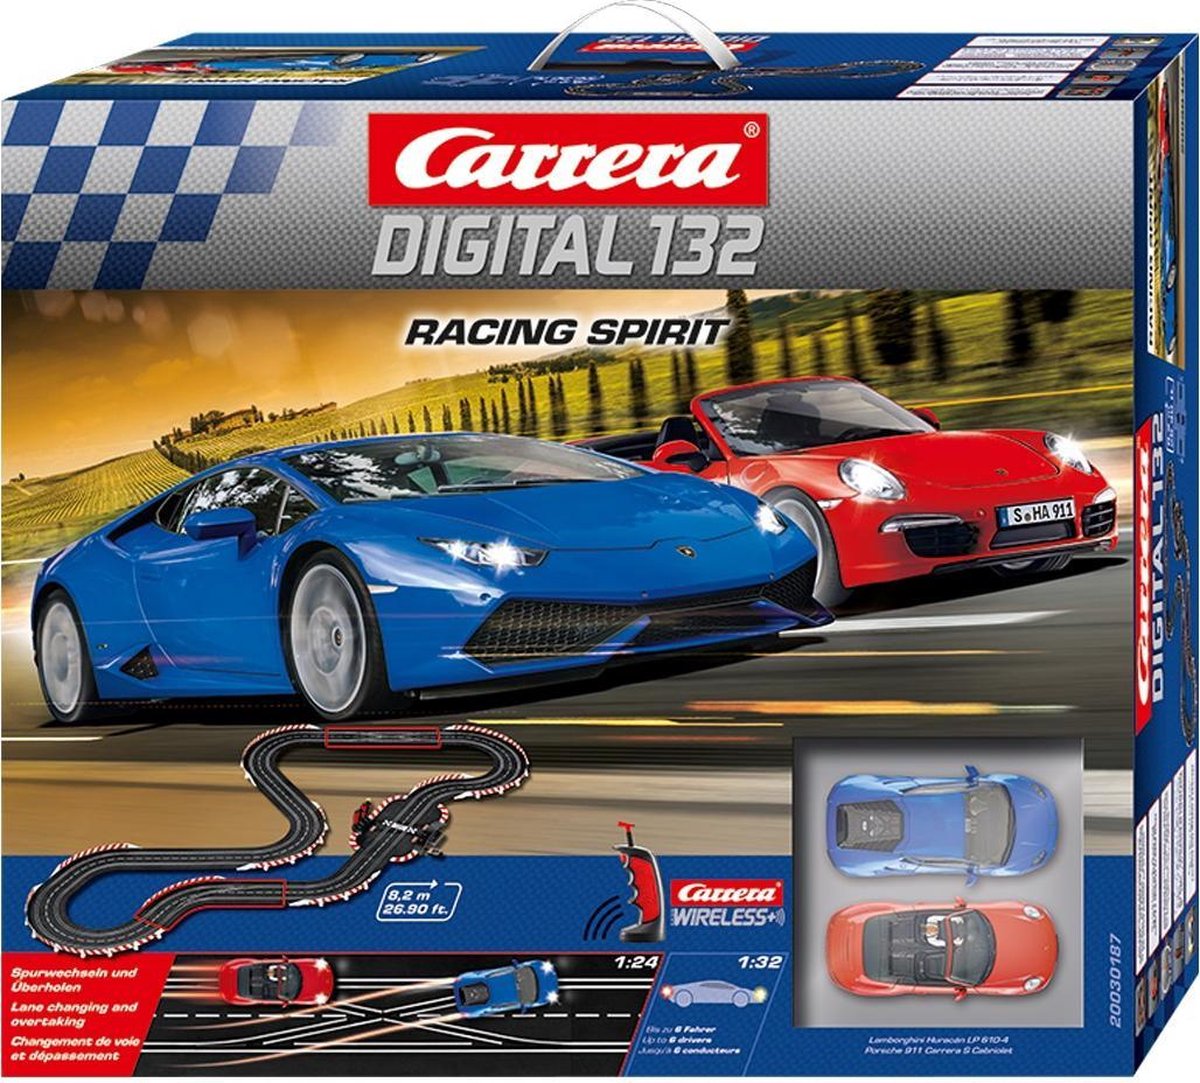 Carrera Digital 132 Racing Spirit - Racebaan | bol.com